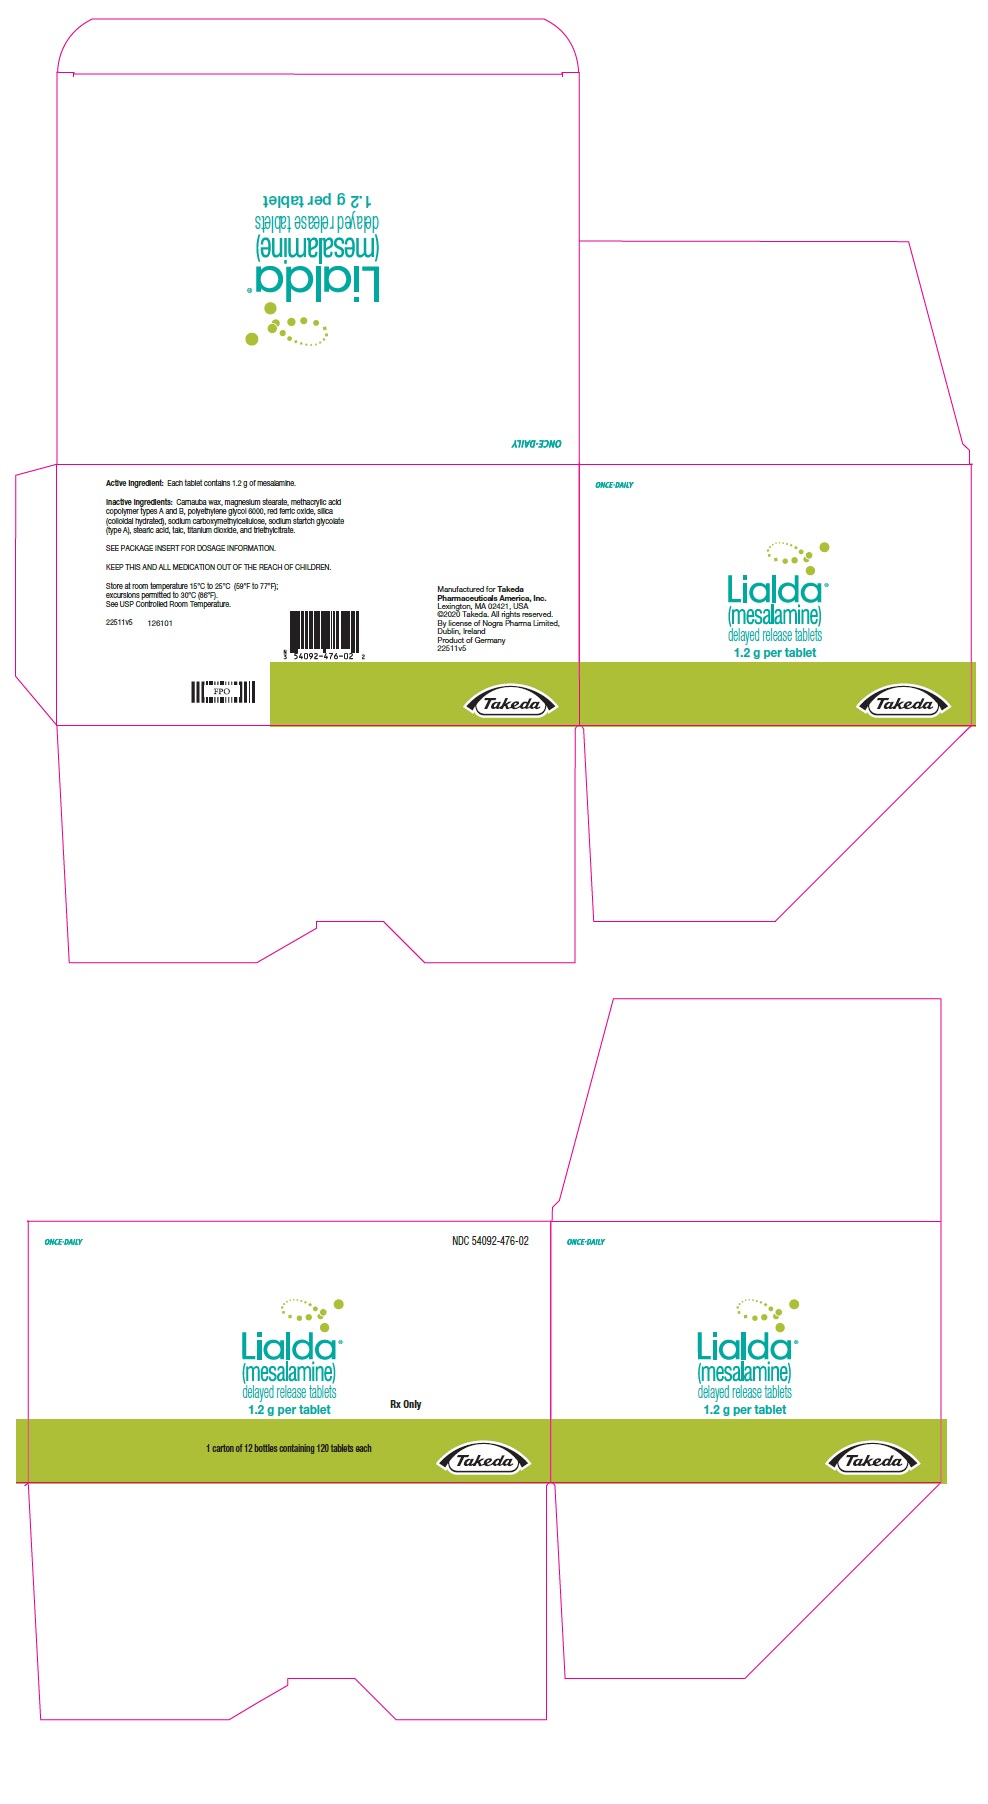 PRINCIPAL DISPLAY PANEL - 1.2 g Tablet Bottle Carton